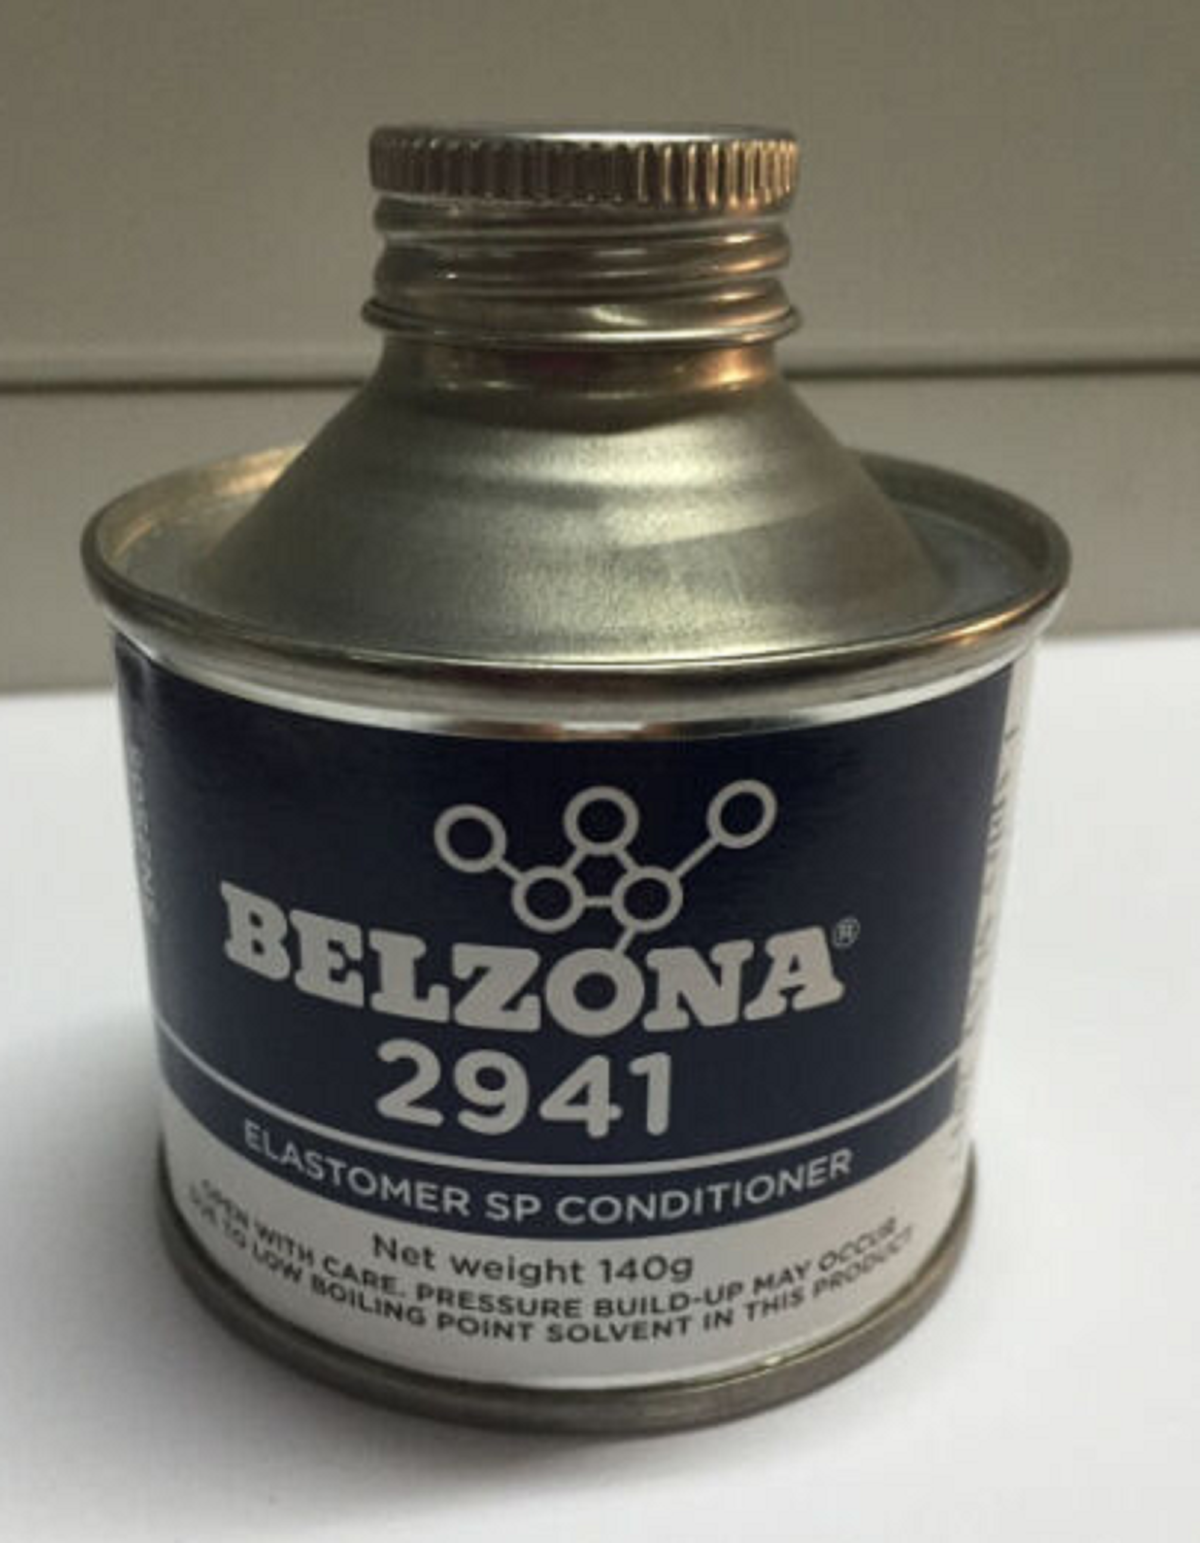 Belzona 2941